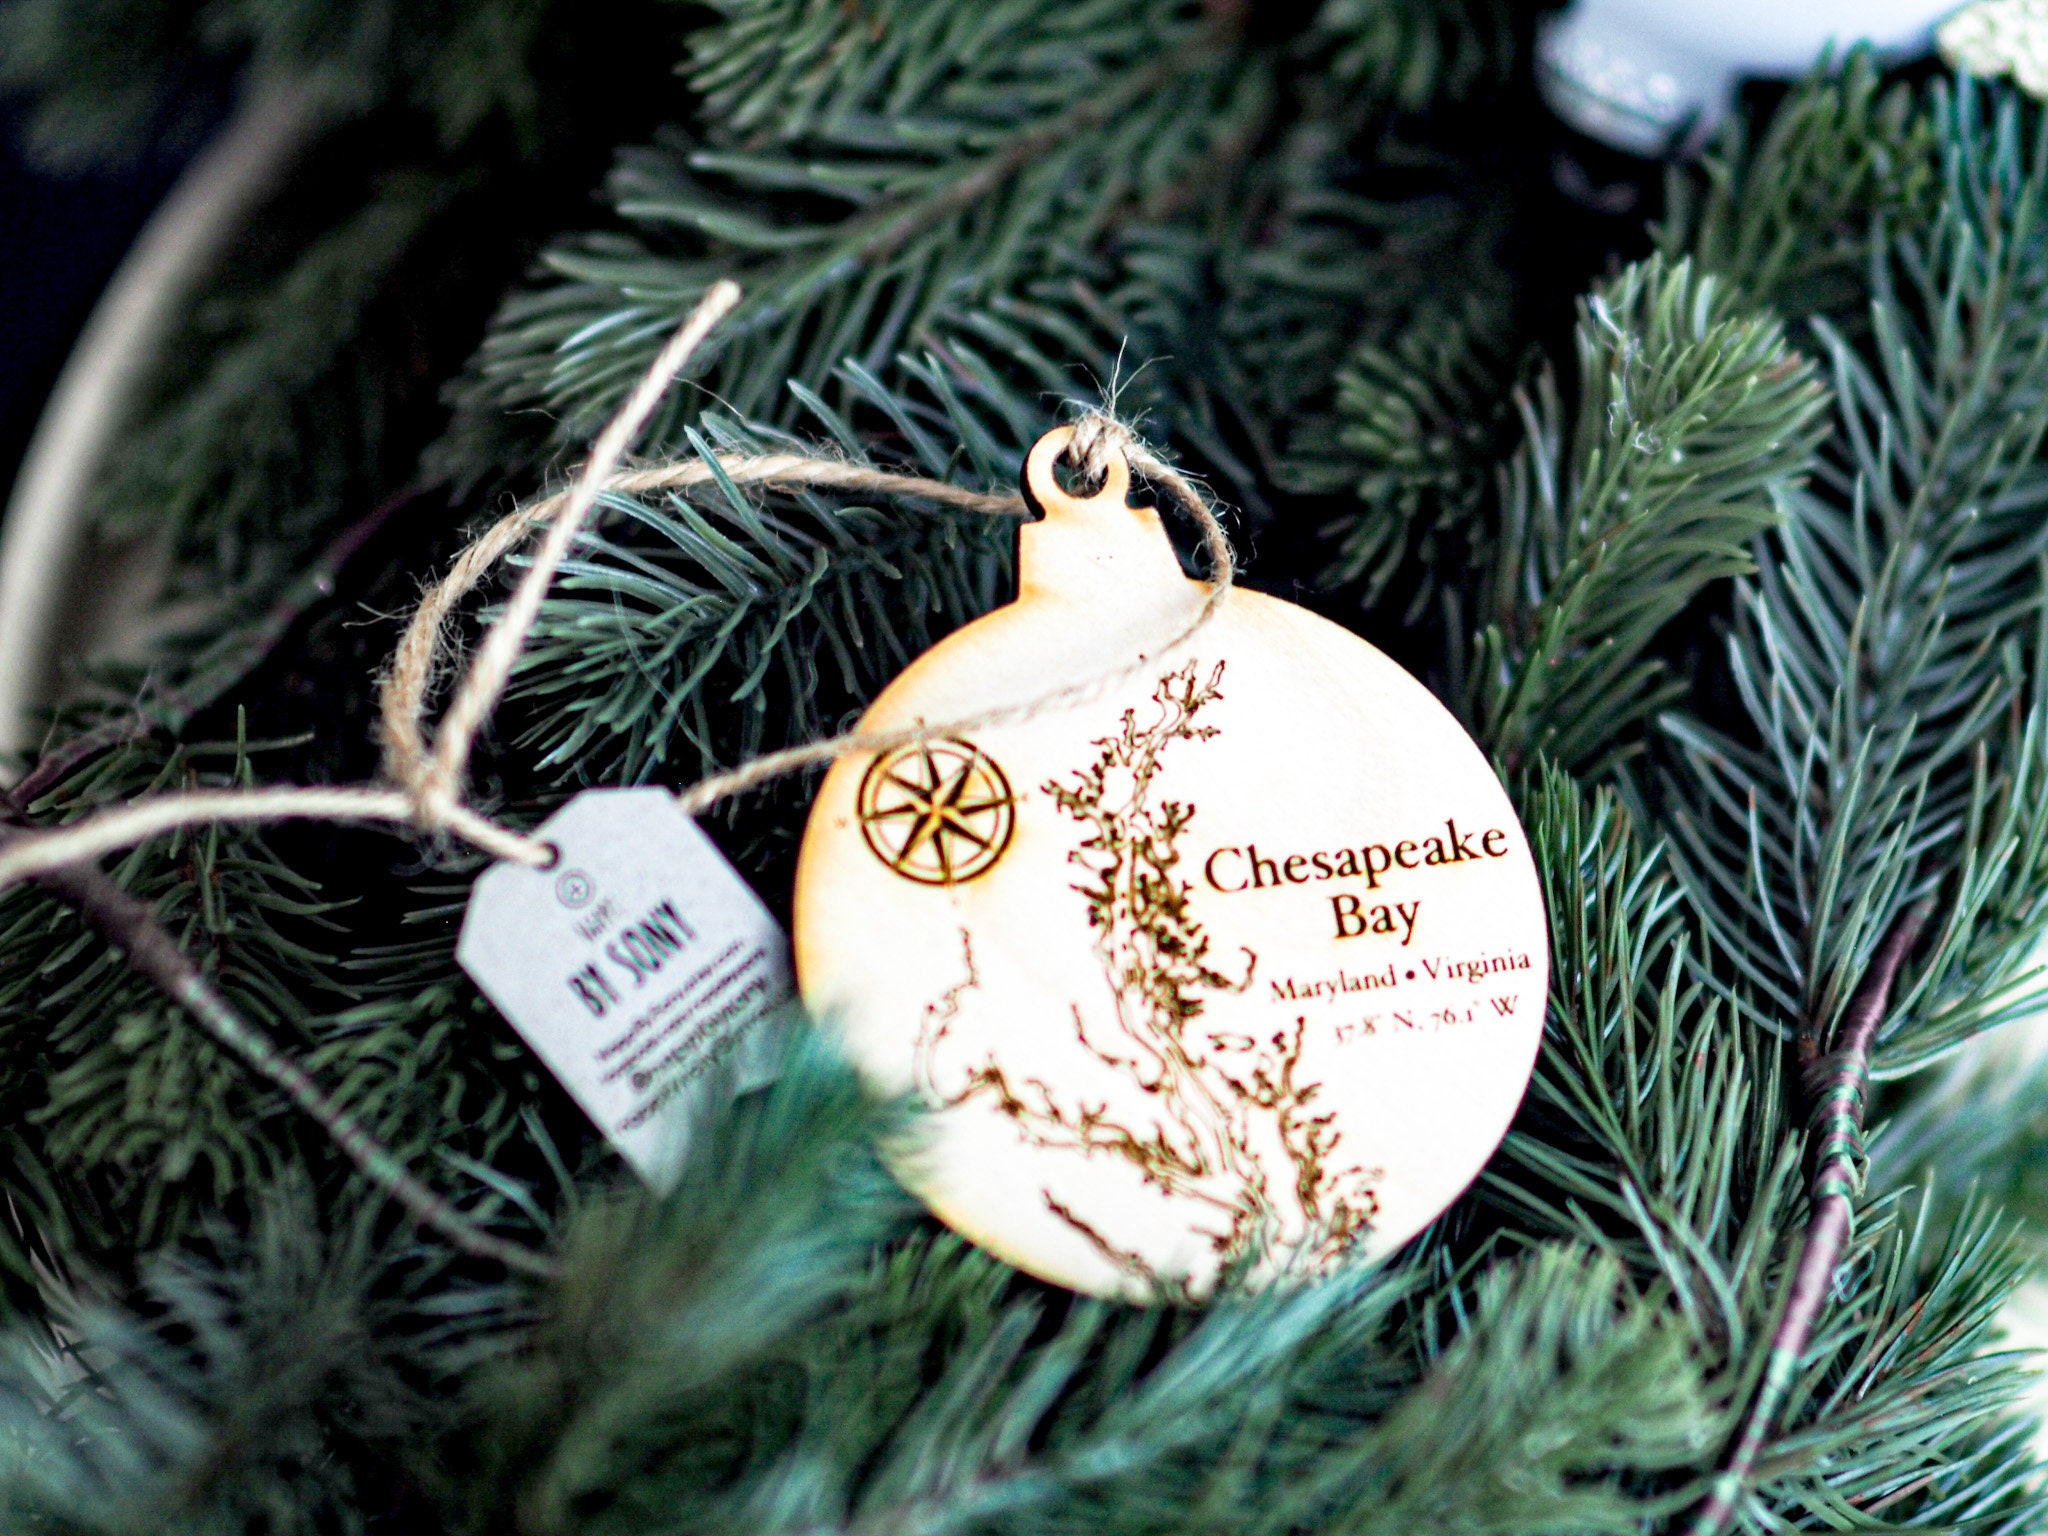 Best Neighbors Ever Wood Slice Ornament, Best Neighbor Ever Wood Ornament,  Rustic Christmas Ornament, Wood Slice Ornament 